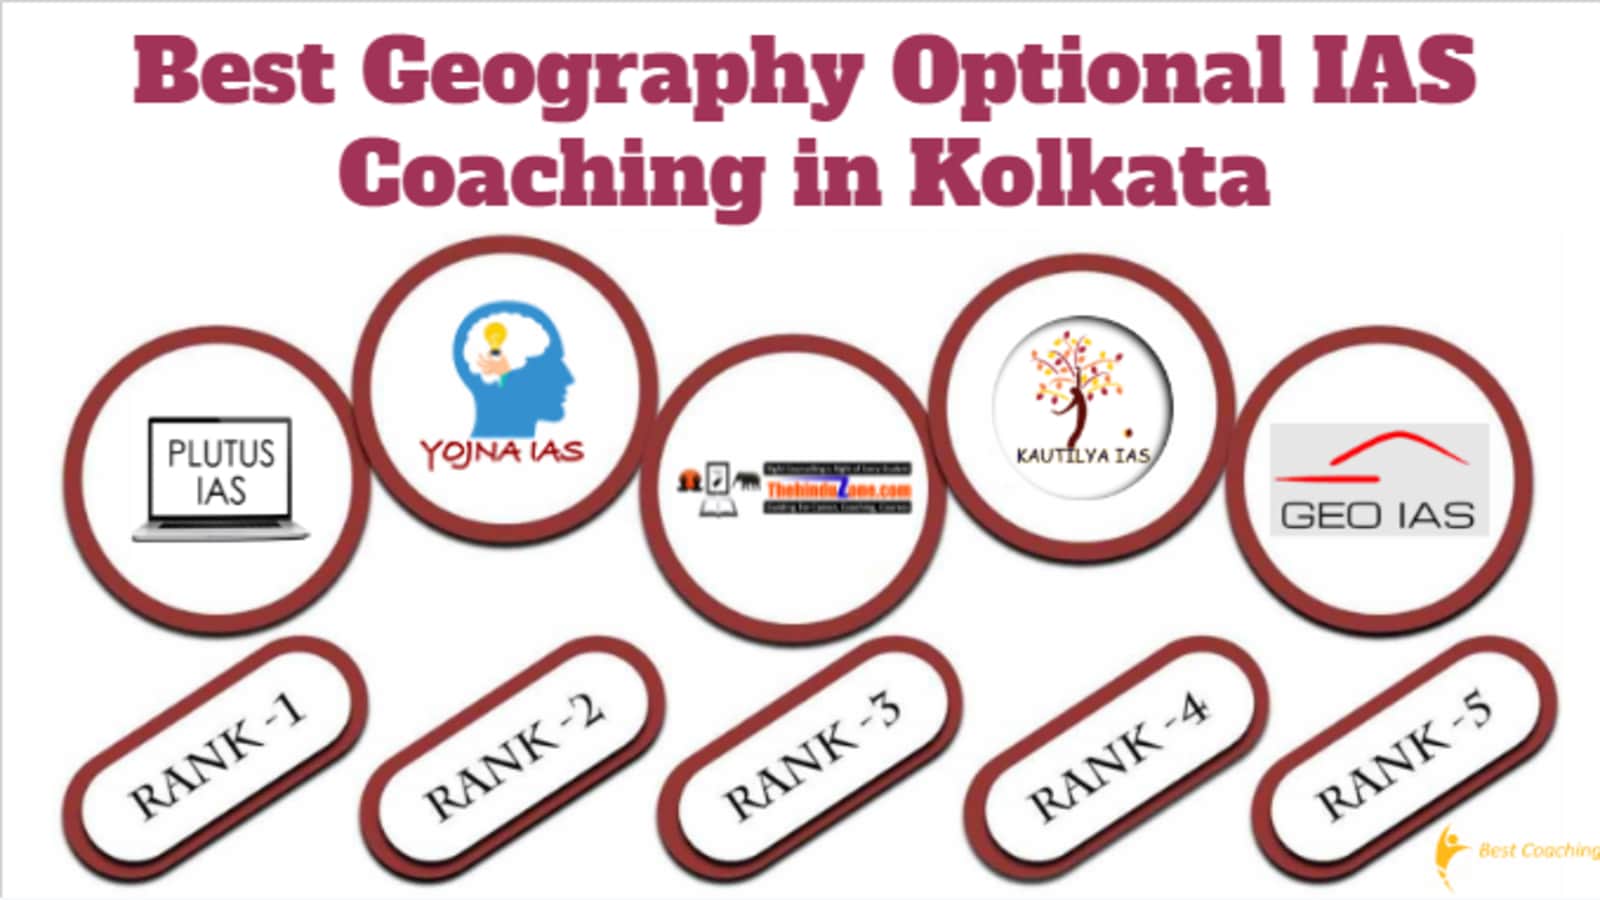 Best Geography Optional IAS Coaching in Kolkata